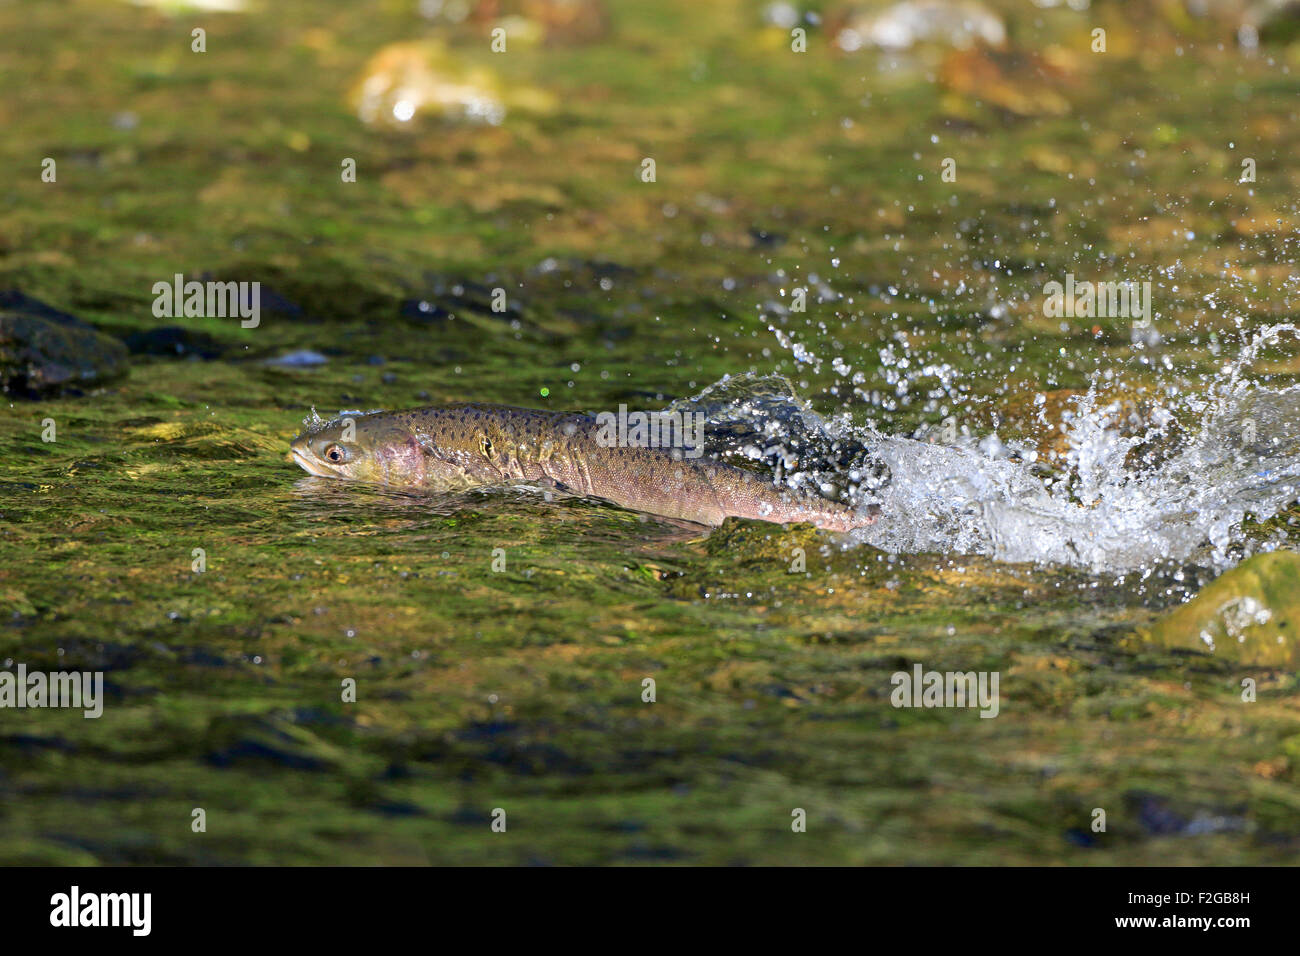 Salmon swimming in shallow water in British Columbia Canada Stock Photo